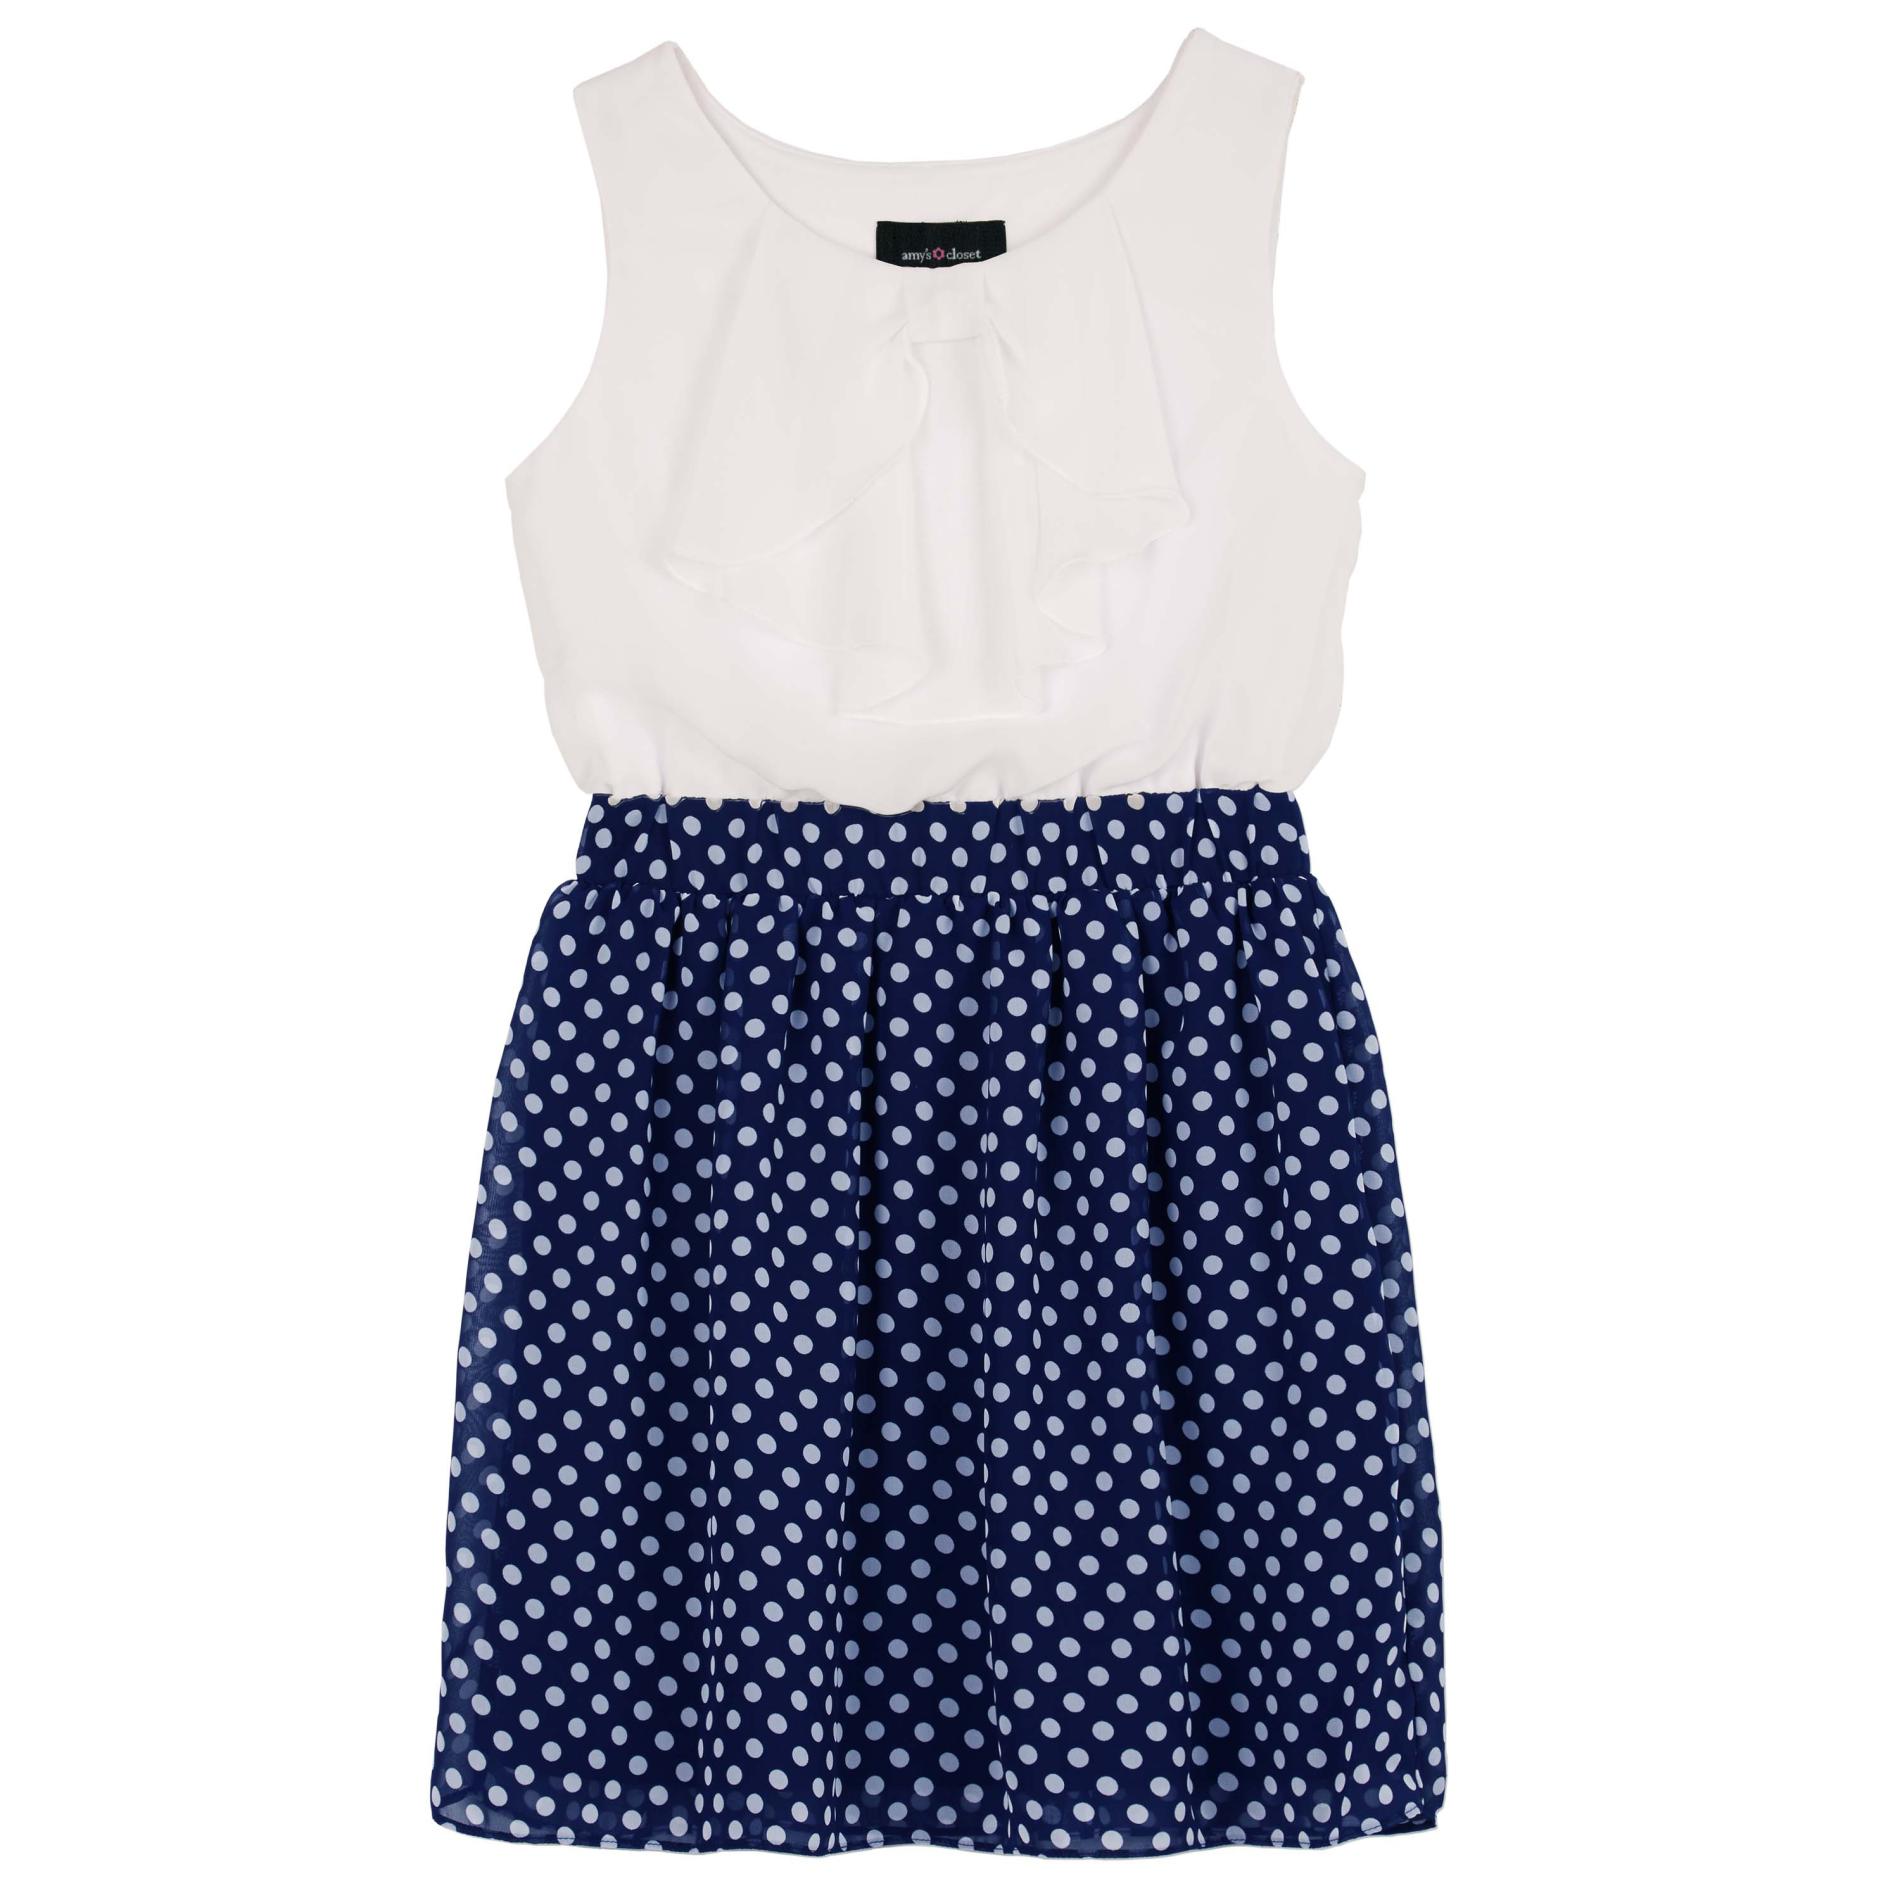 Amy's Closet Girl's Ruffled Dress - Polka Dots